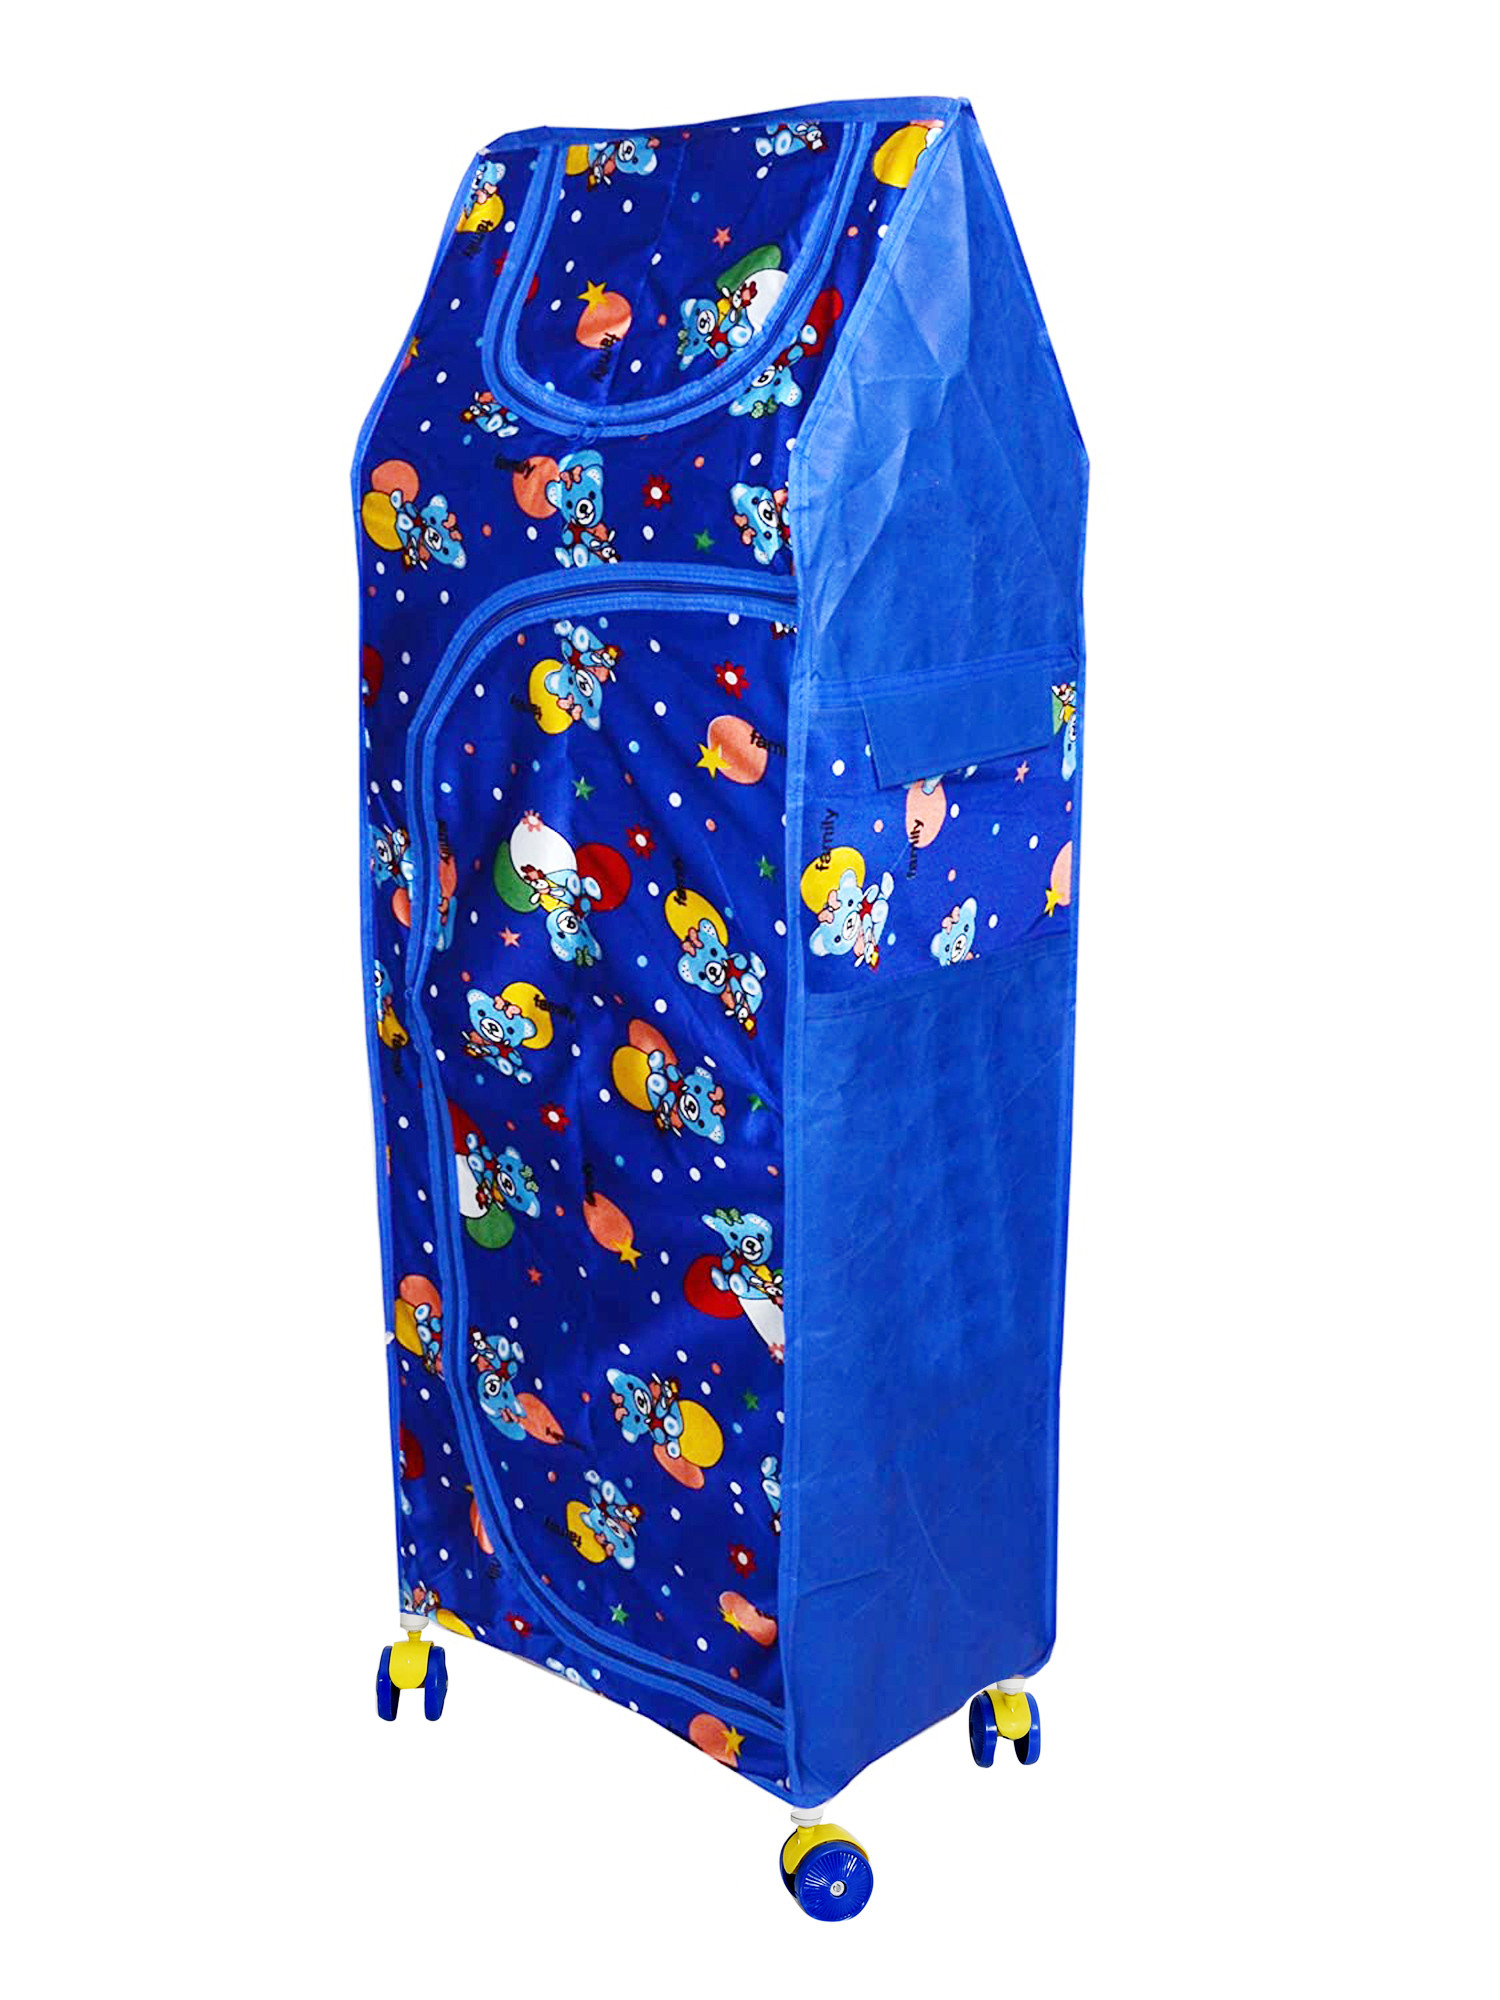 Kuber Industries Multipurpose Plastic Printed Foldable Toy Box/Wardrobe Storage Almirah For Kids With 5 Shelves (Blue)-KUBMART1152